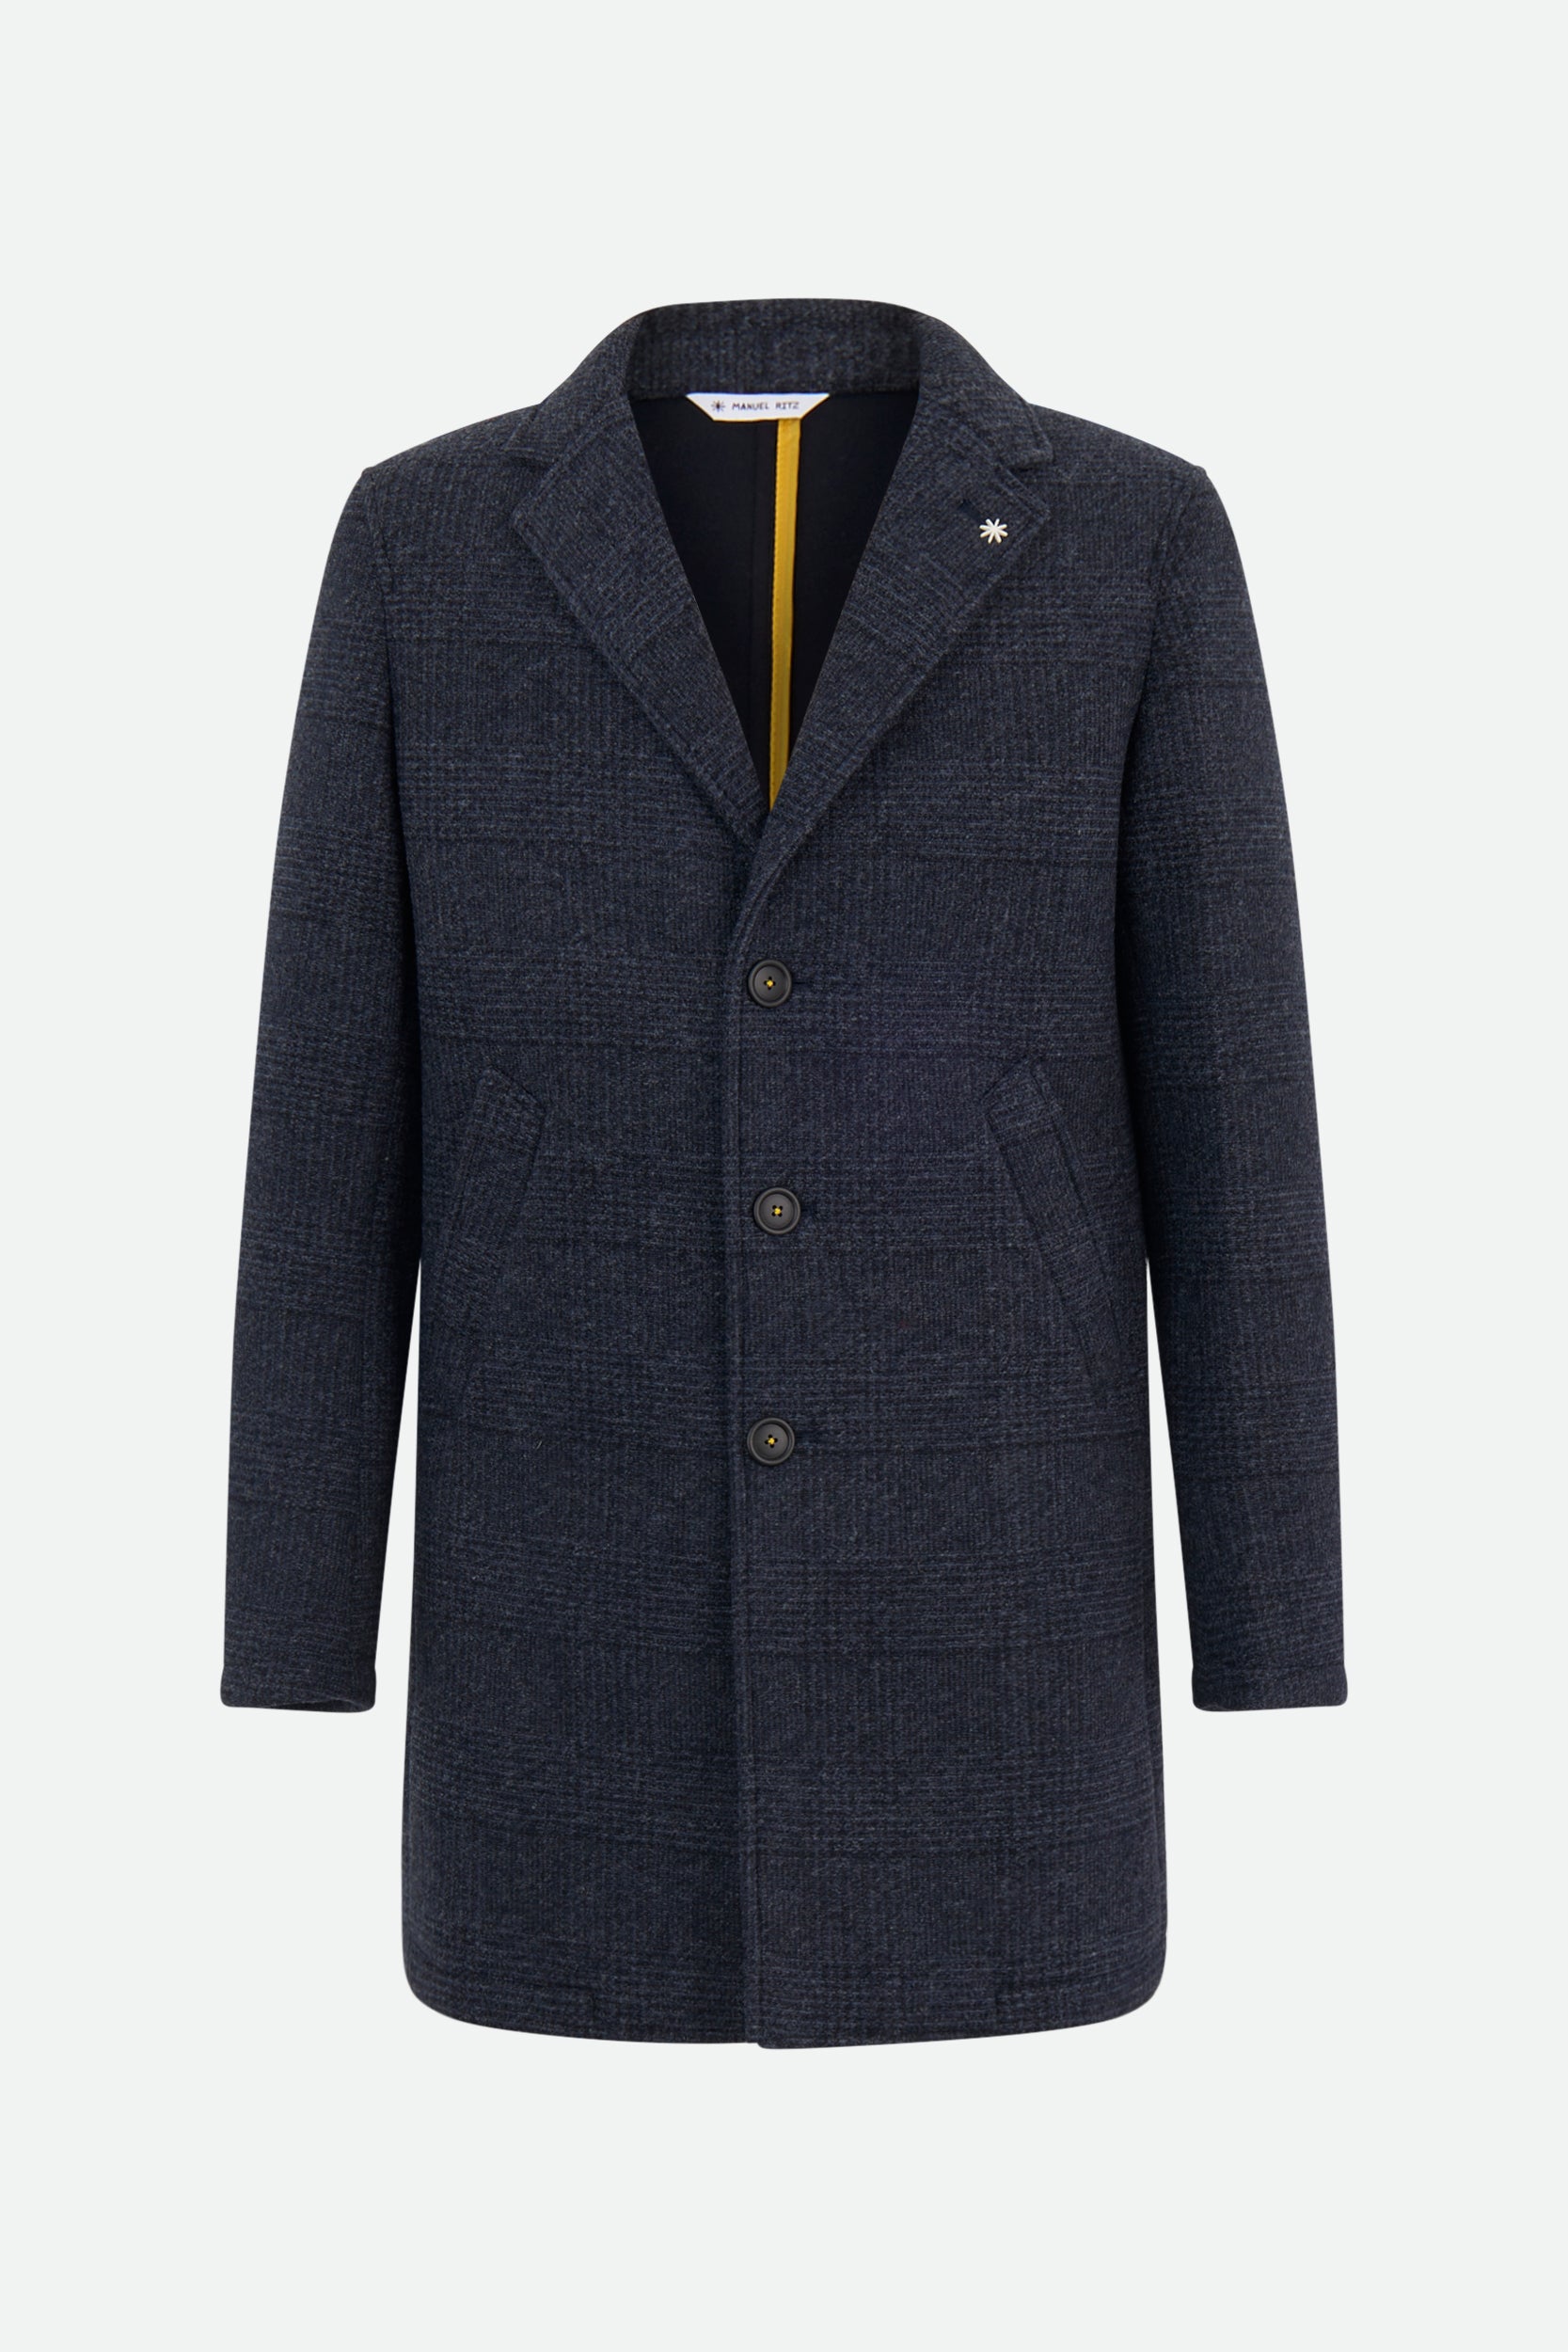 Manuel Ritz Blue Wool Blend Coat